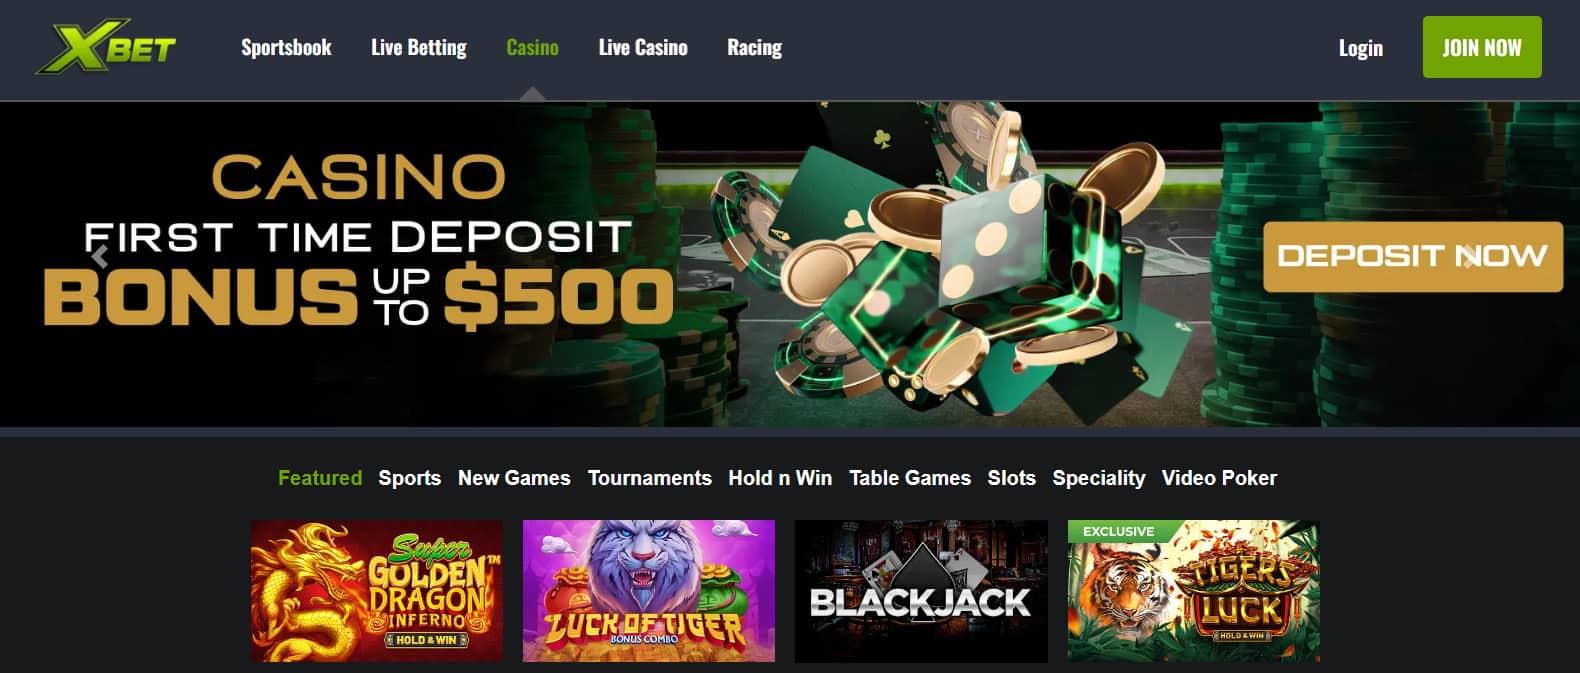 offshore gambling partners xbet casino homepage welcome bonus